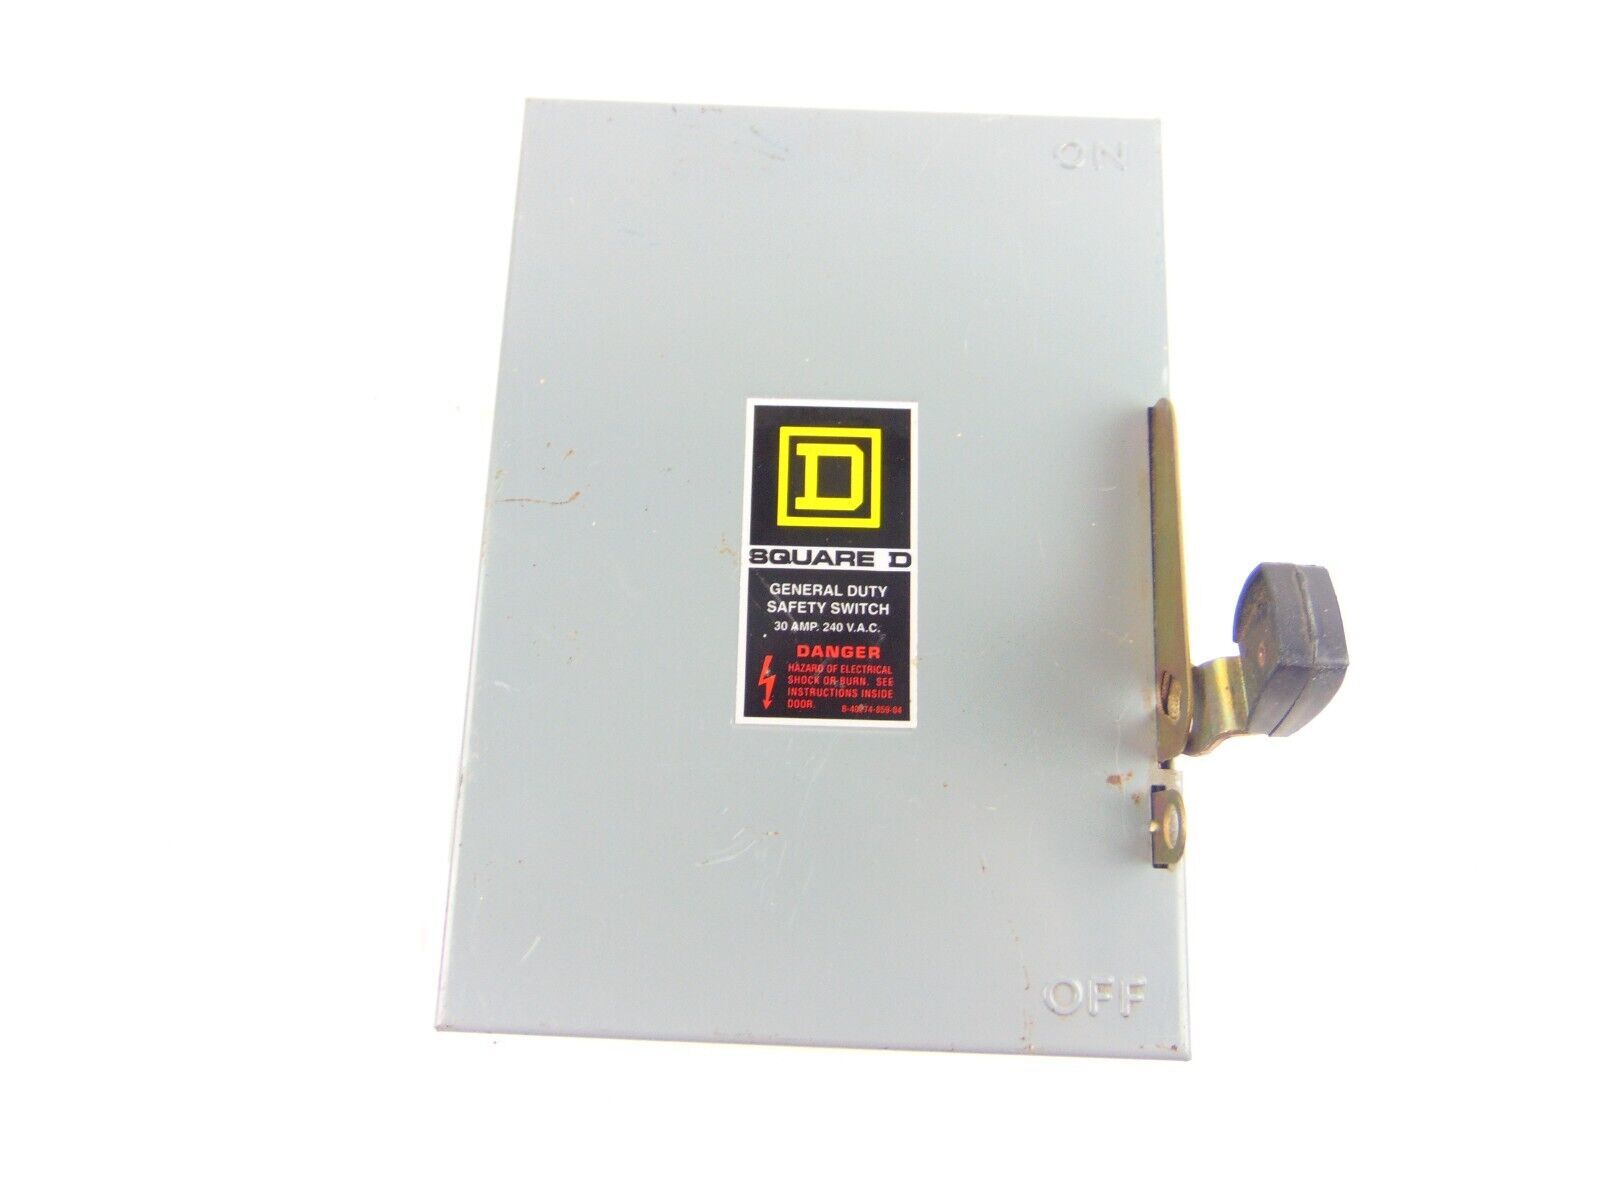 Square D Safety Switch DU321 4 Holes - $89.10